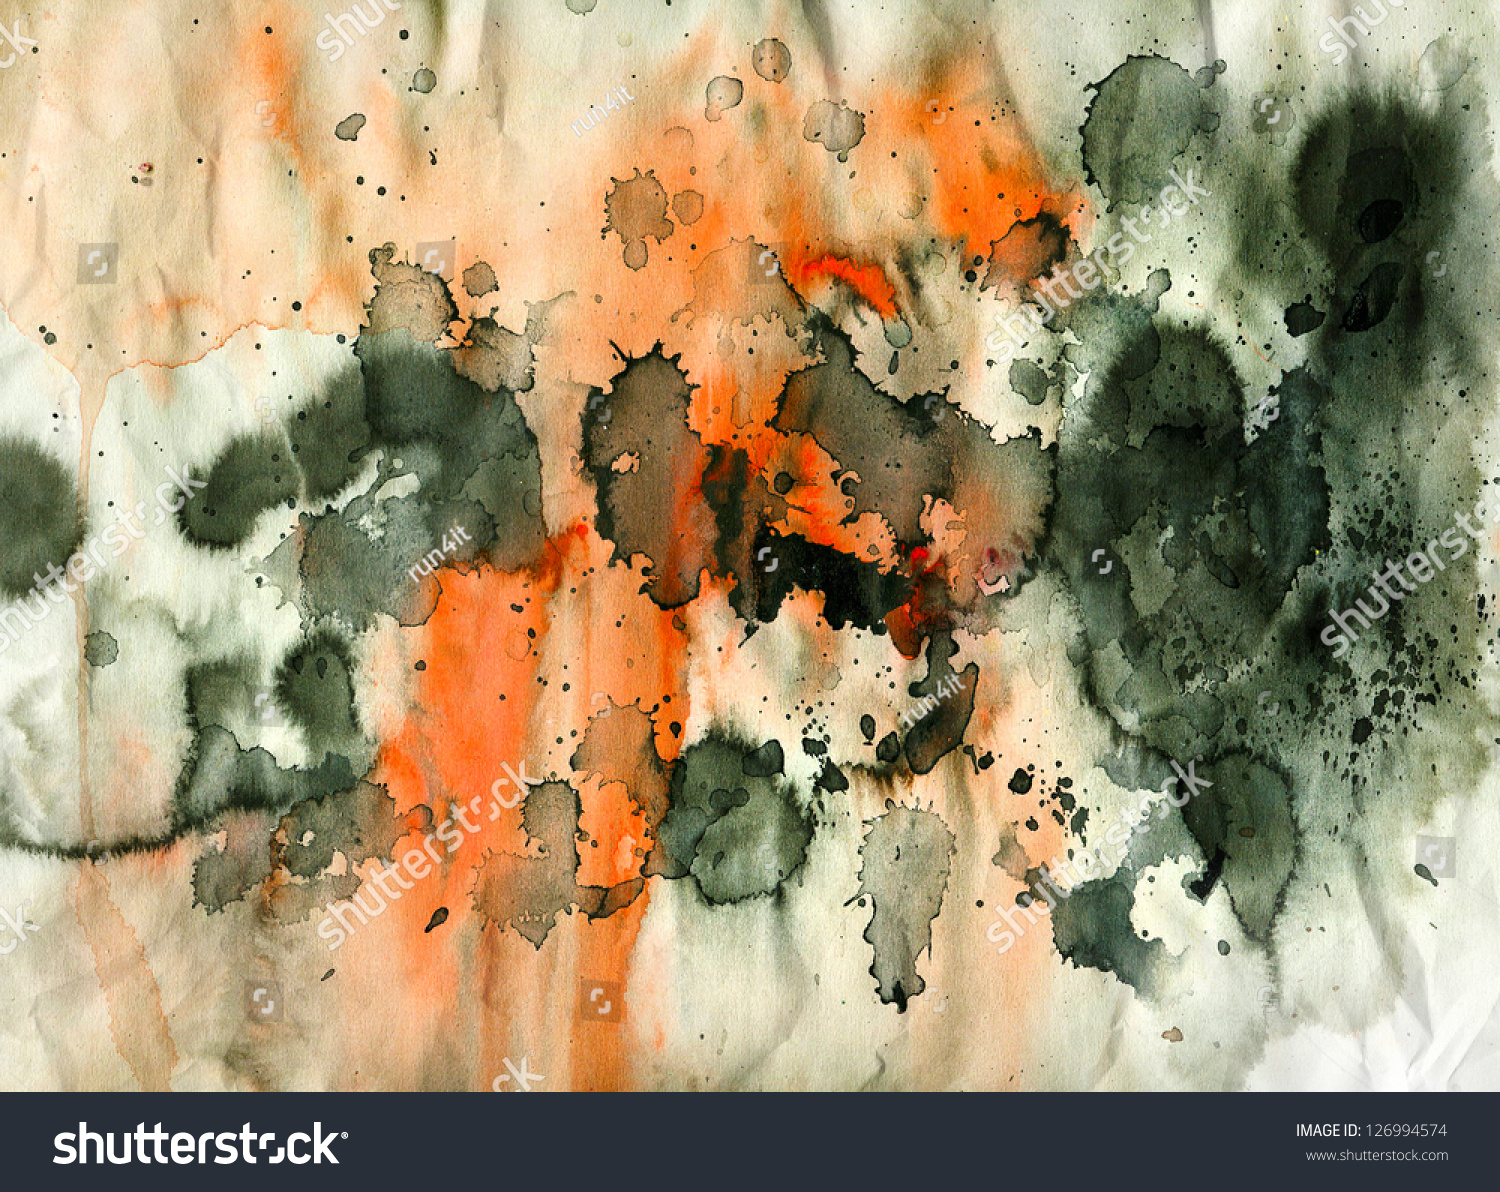 Abstract Paint Splatter Background Stock Photo 126994574 : Shutterstock